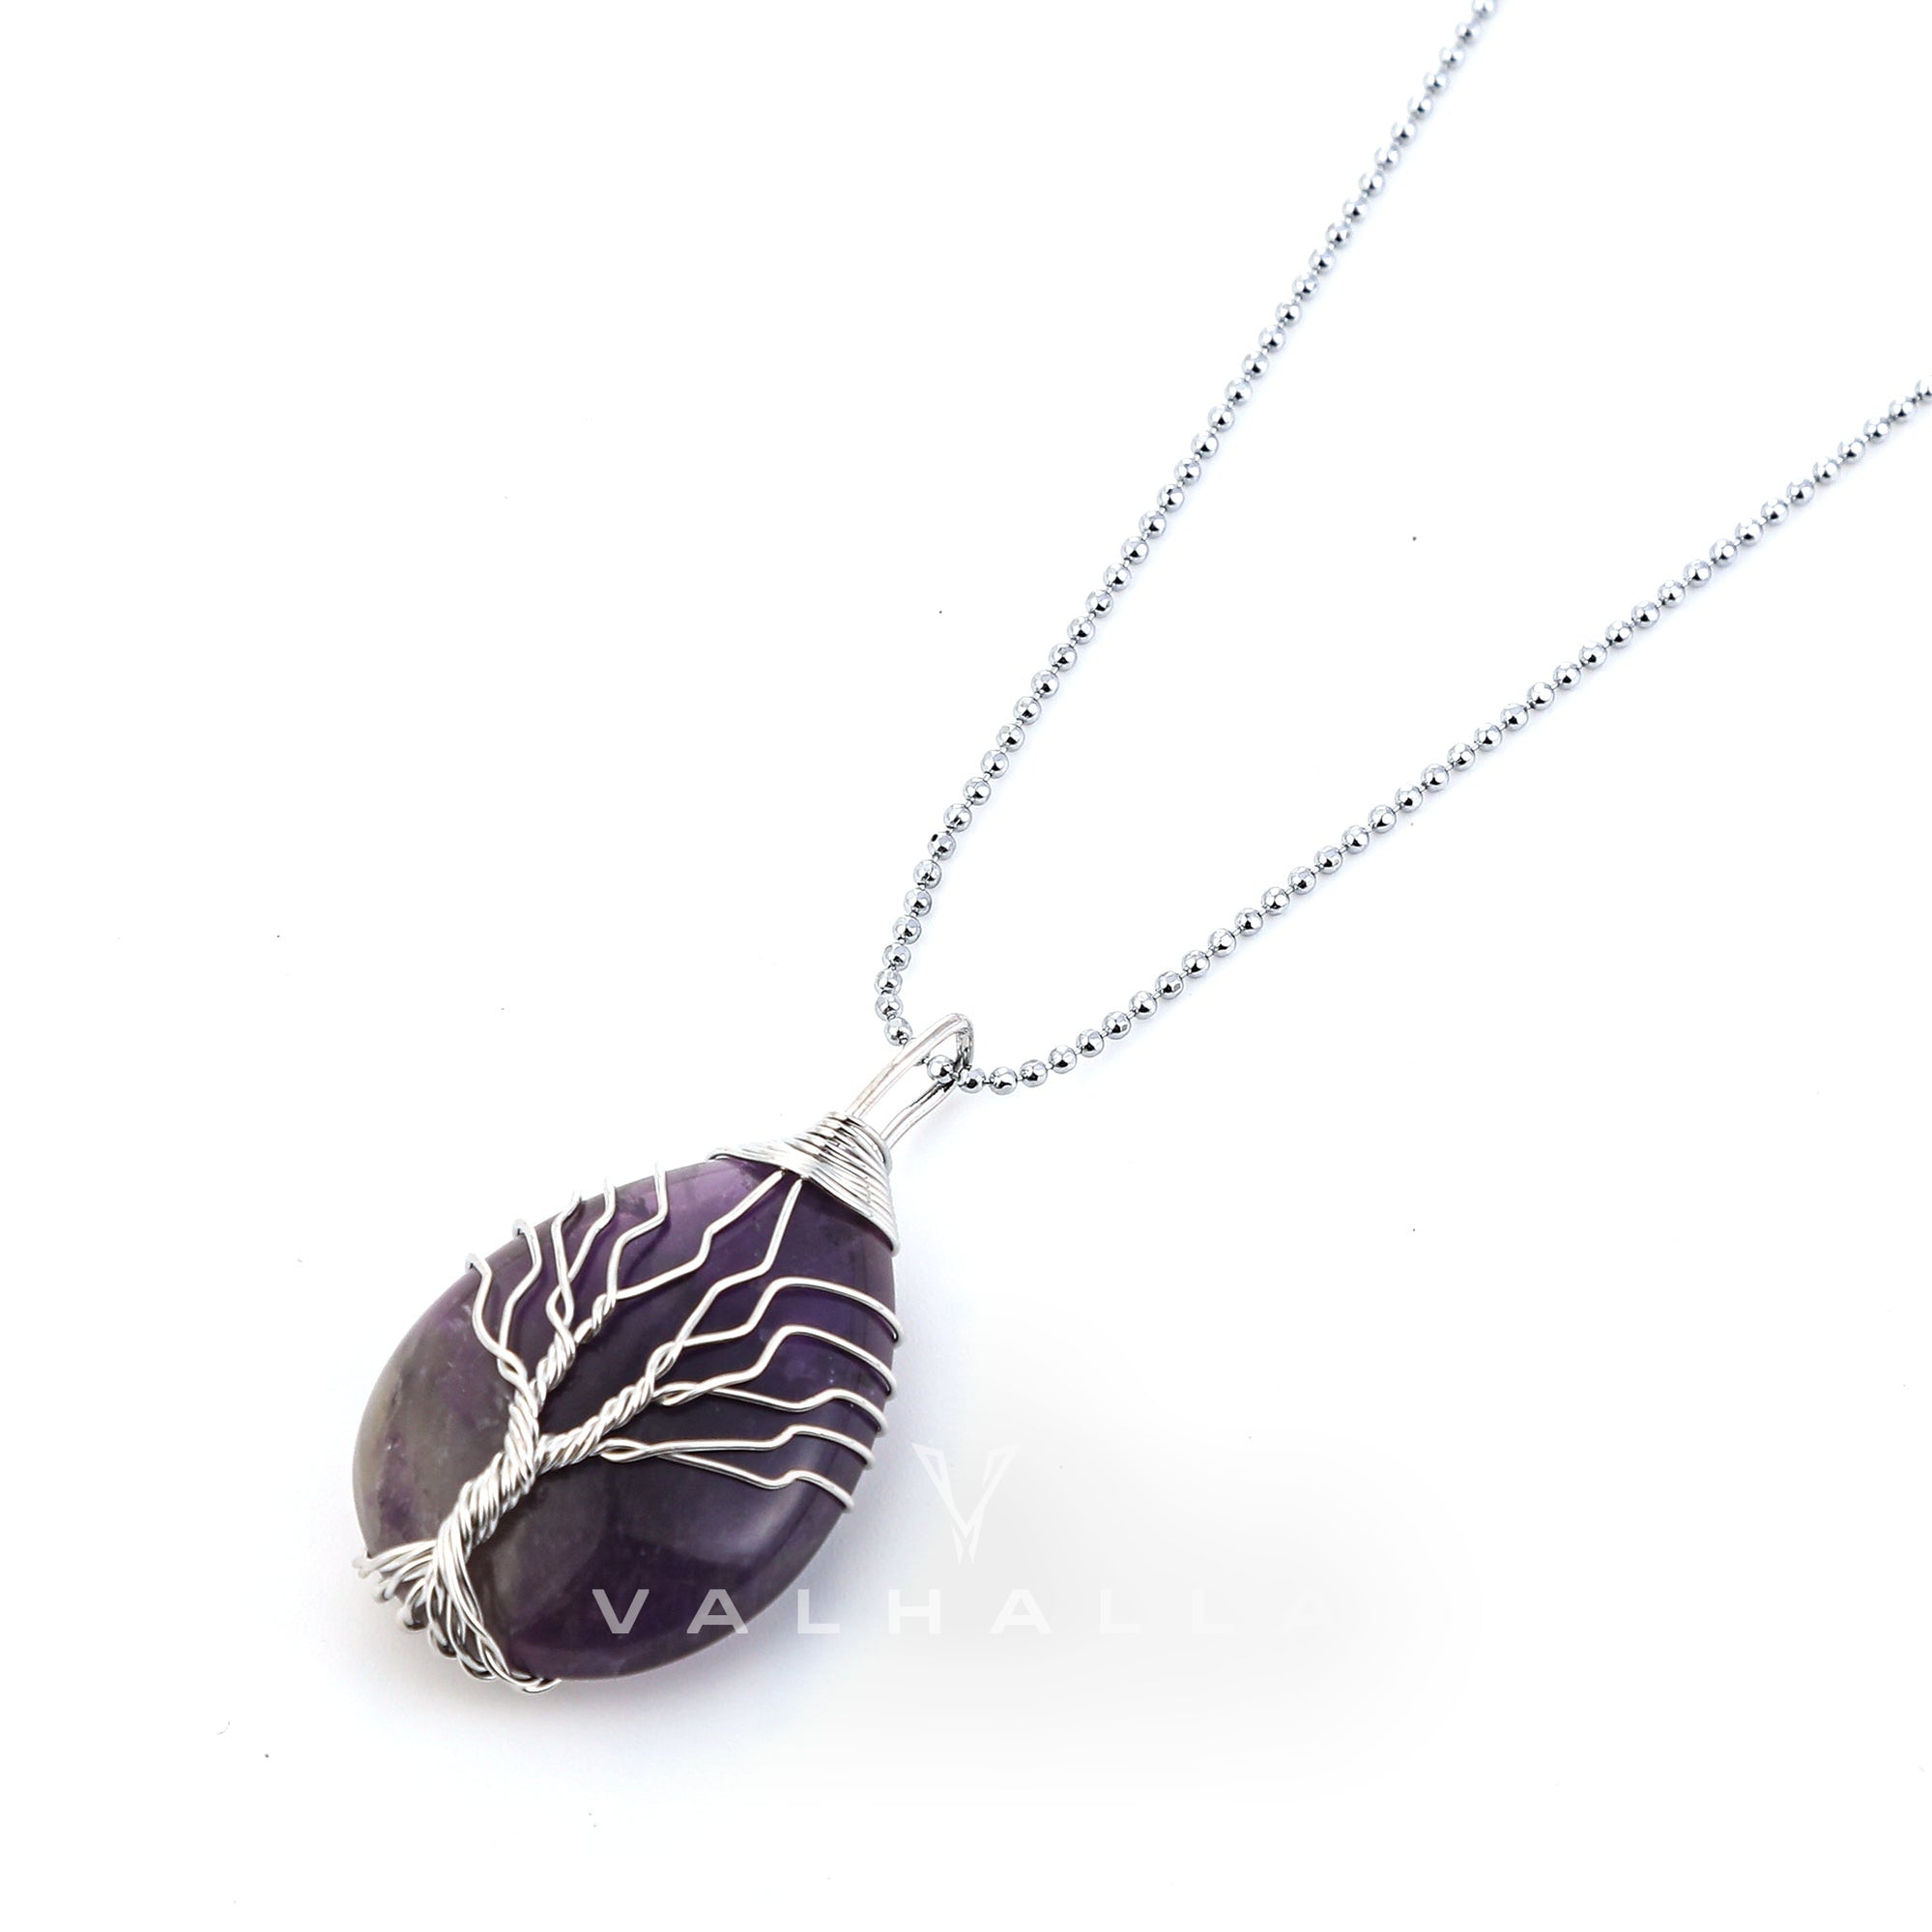 Yggdrasil / Tree of Life Necklace on Teardrop Semi-Precious Stone